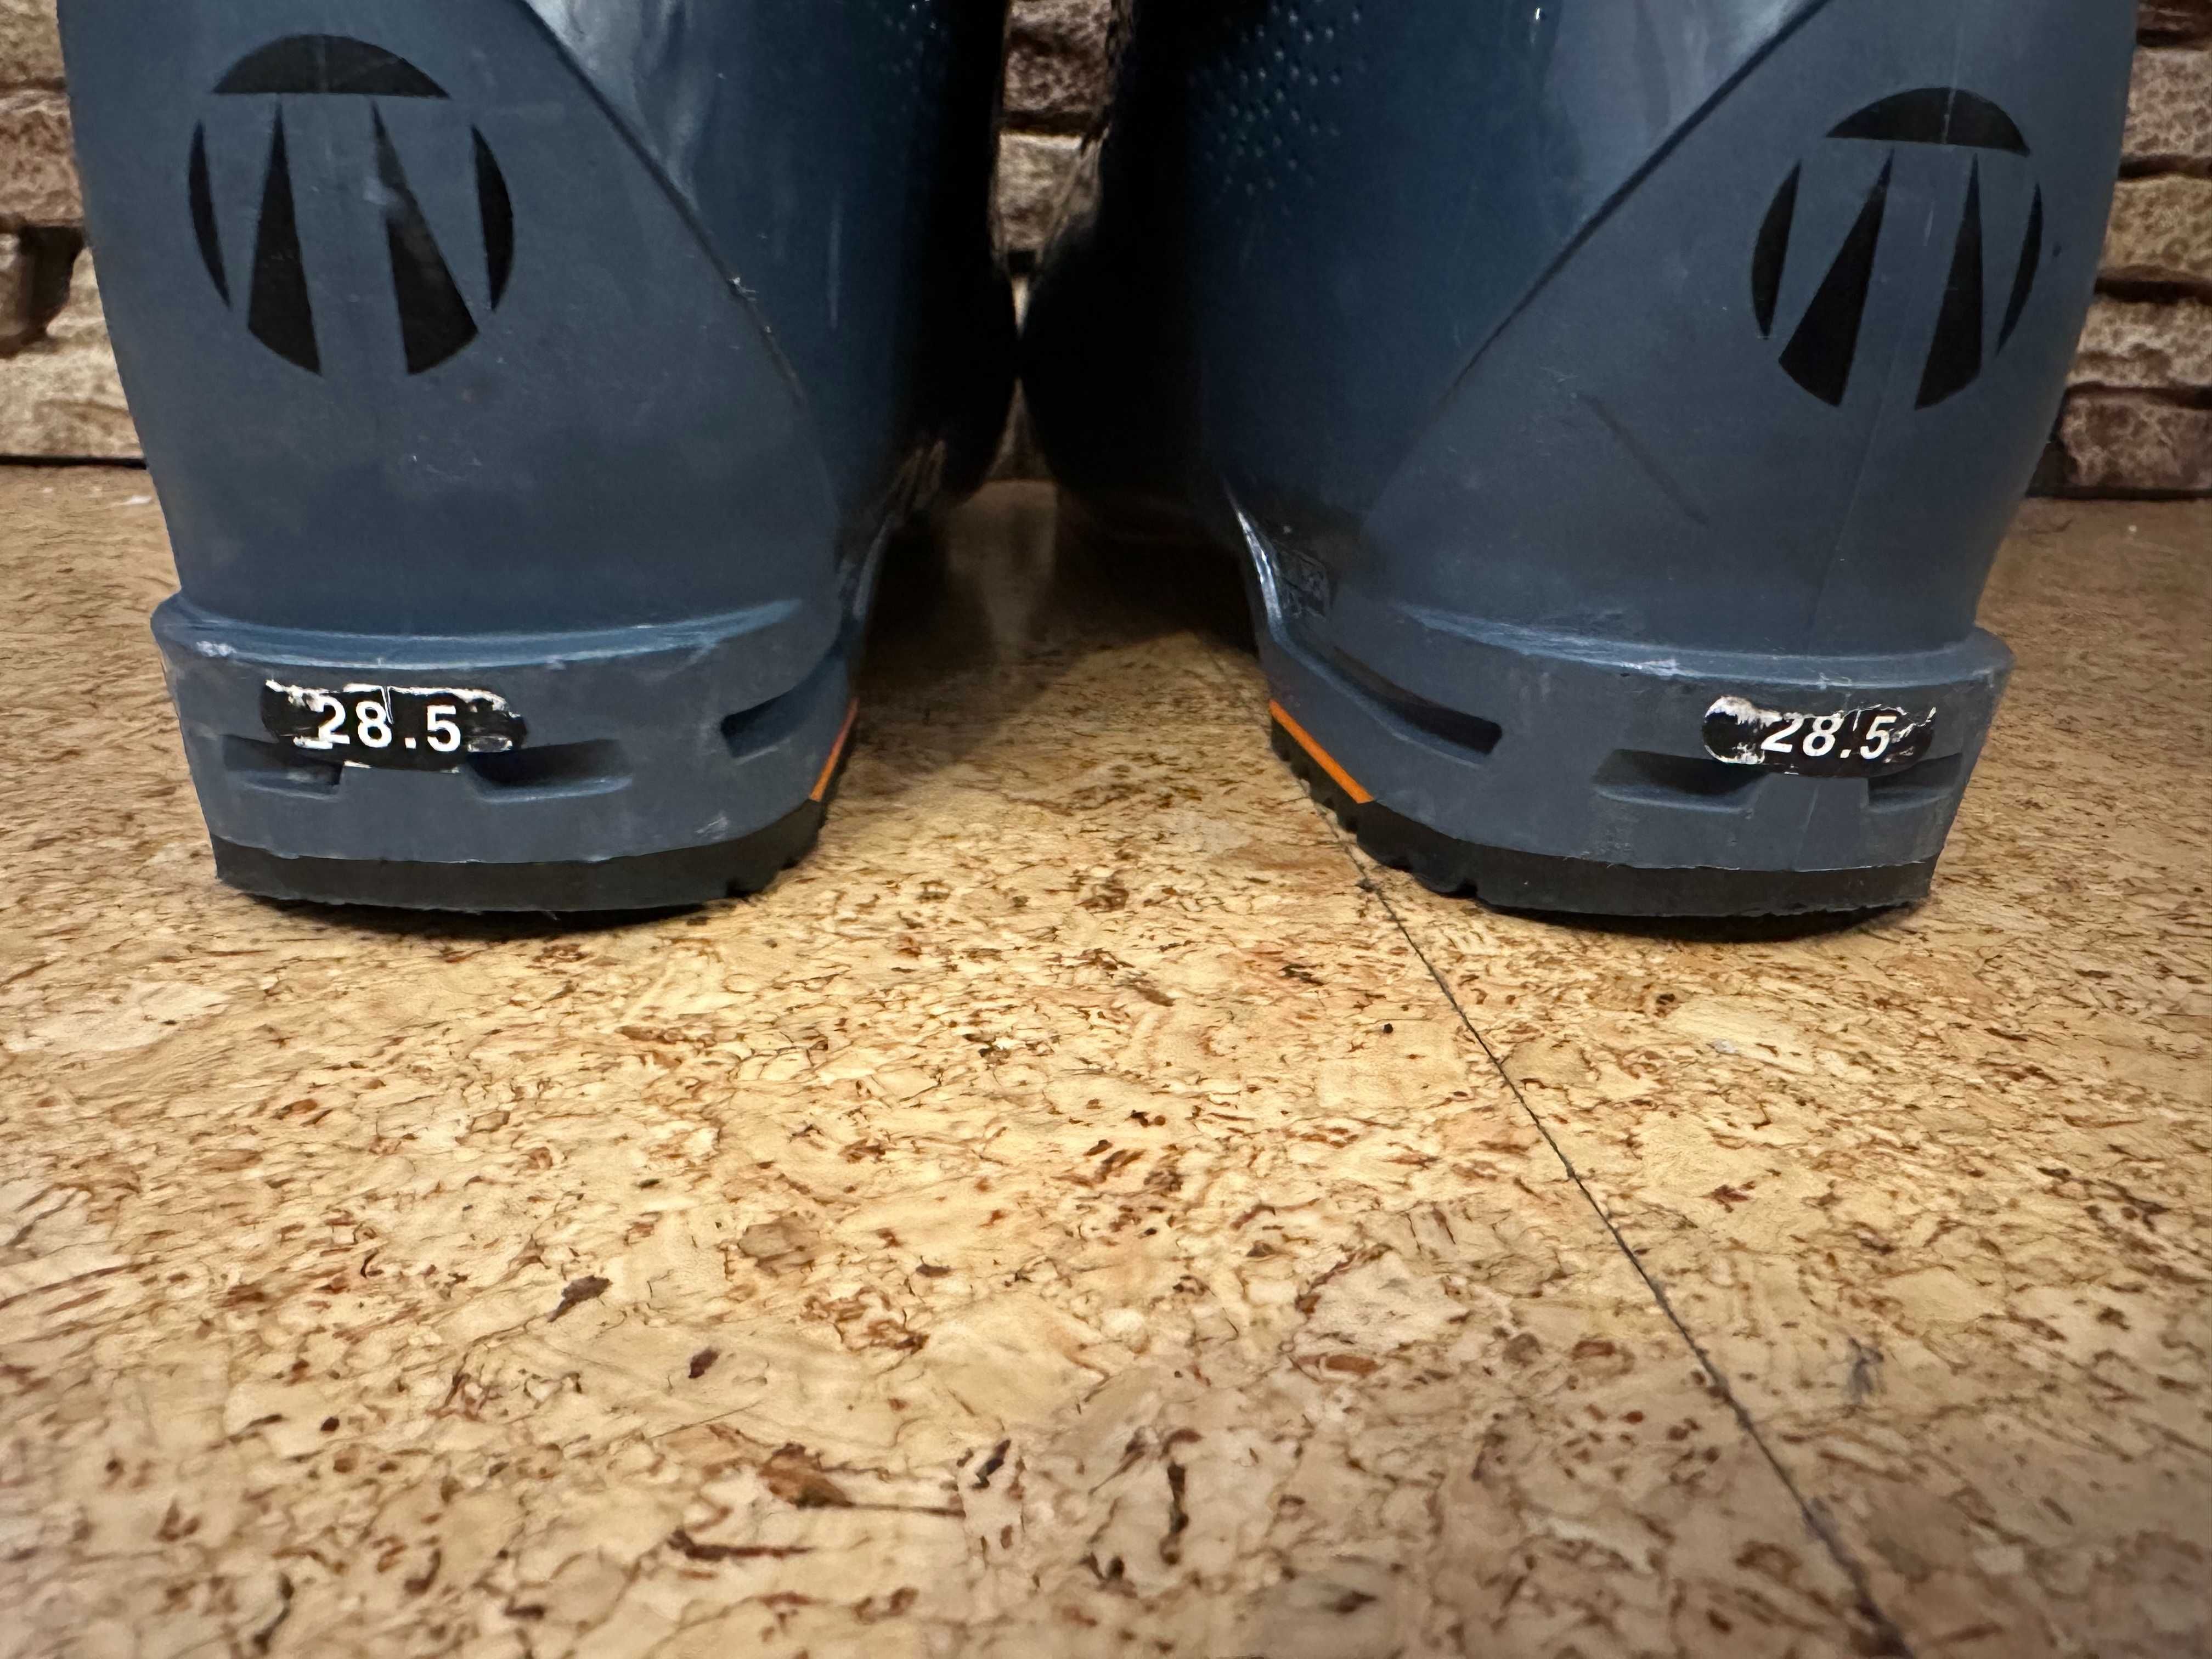 Ски обувки - Tecnica Mach 1, HV 120, 28.5